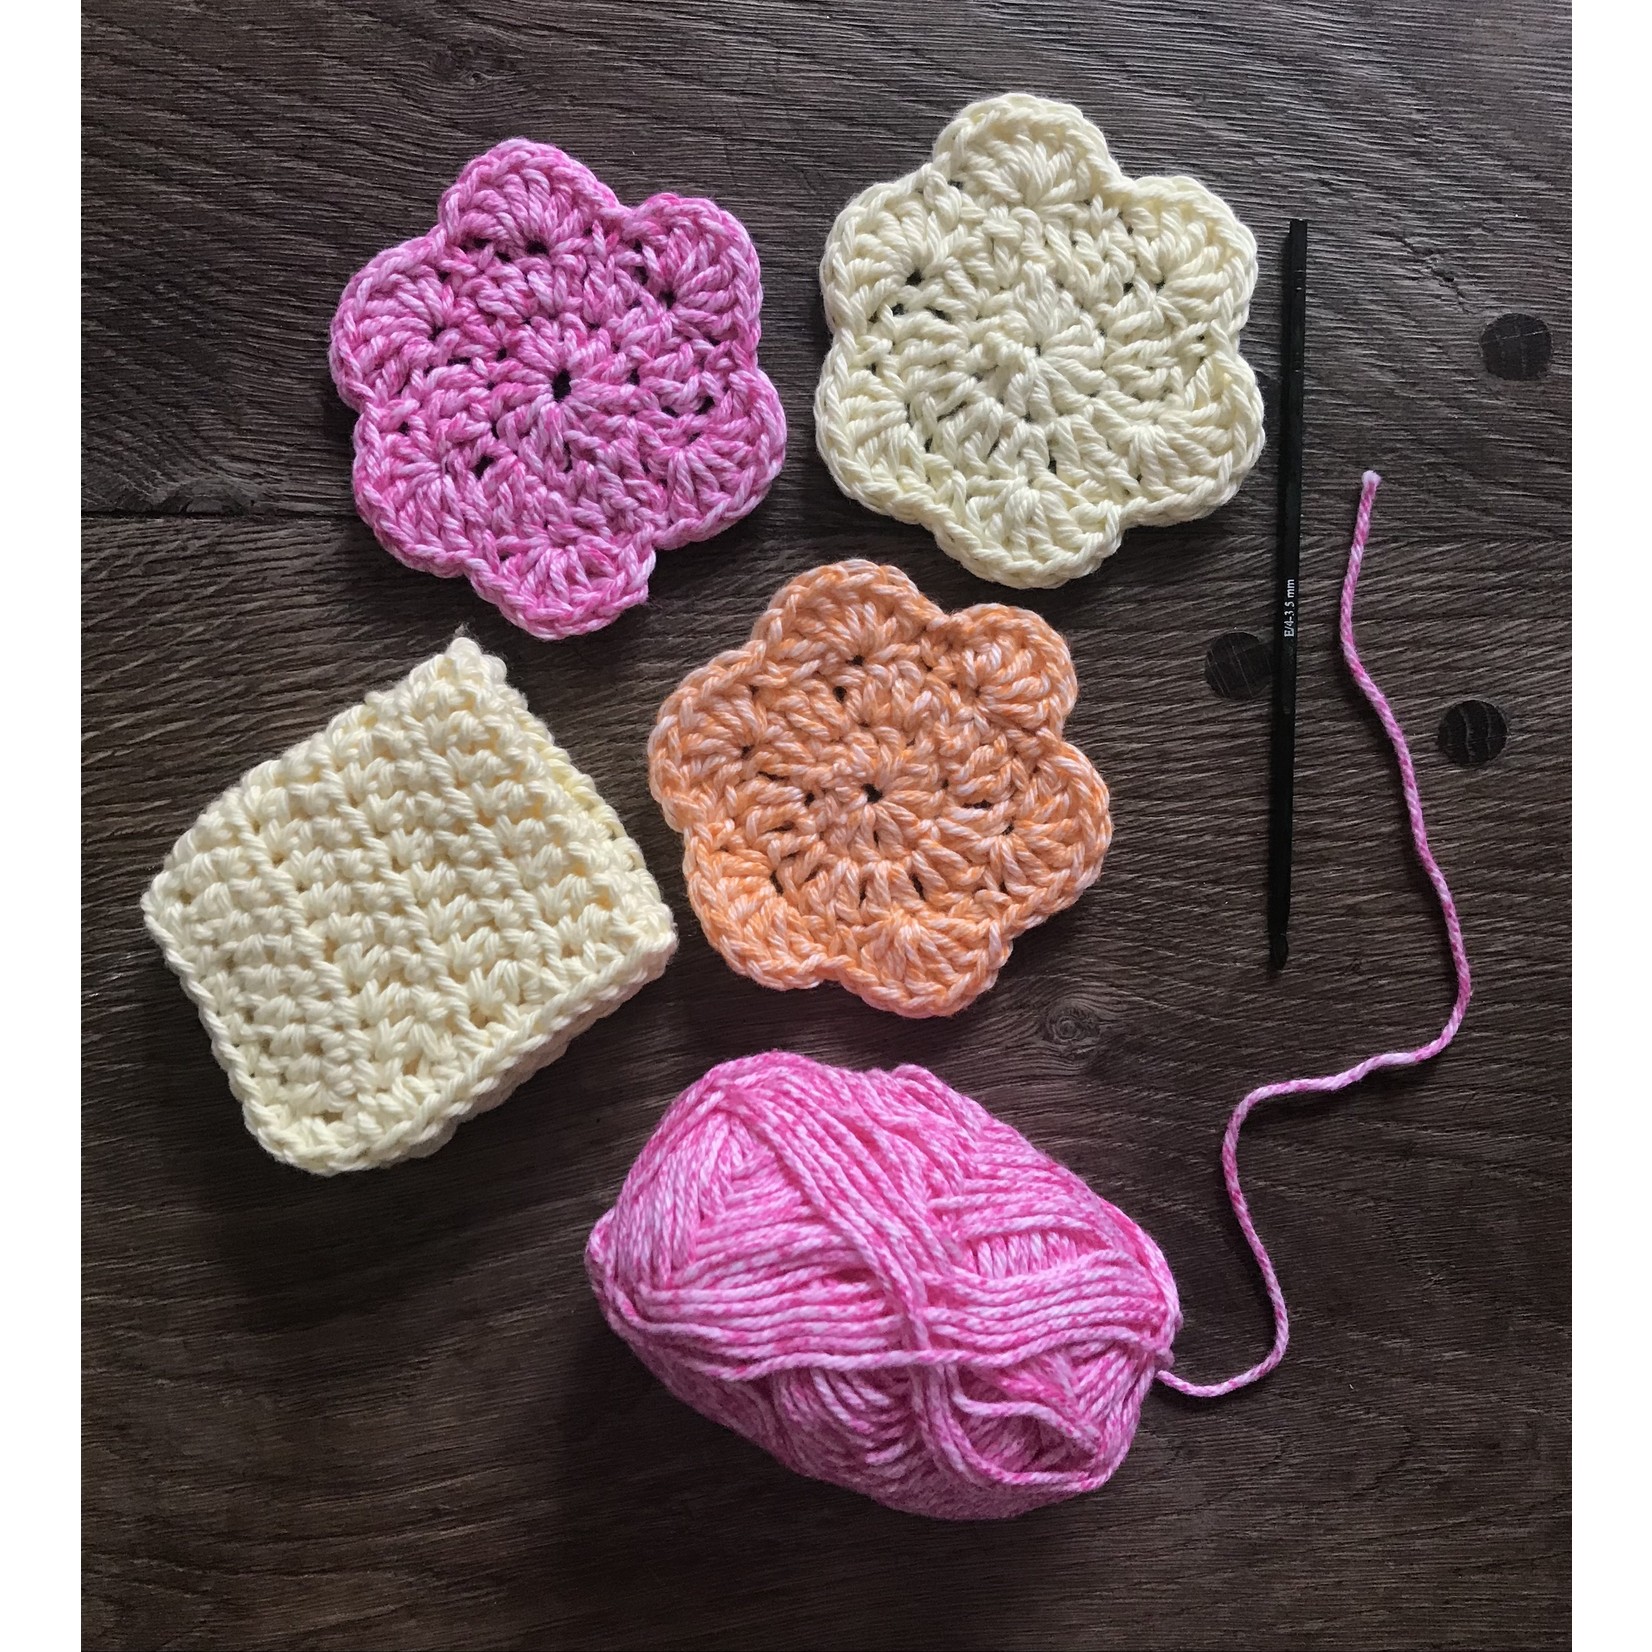 Beginner Crochet  Workshop - Online via Zoom